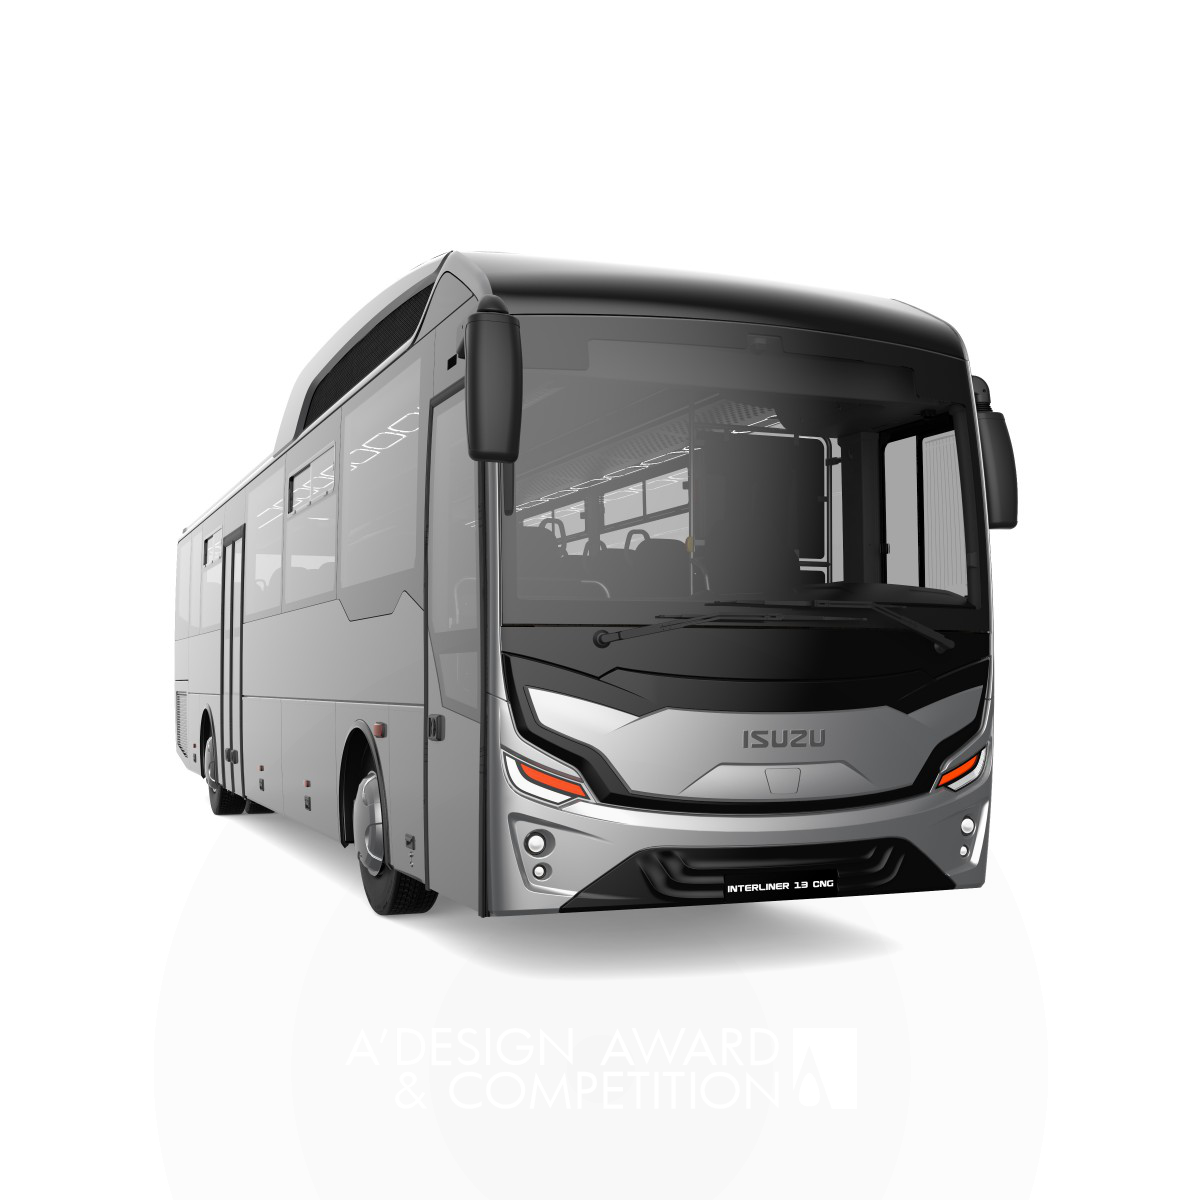 Anadolu Isuzu Design Team wins Golden at the prestigious A' Vehicle, Mobility and Transportation Design Award with Interliner Bus.